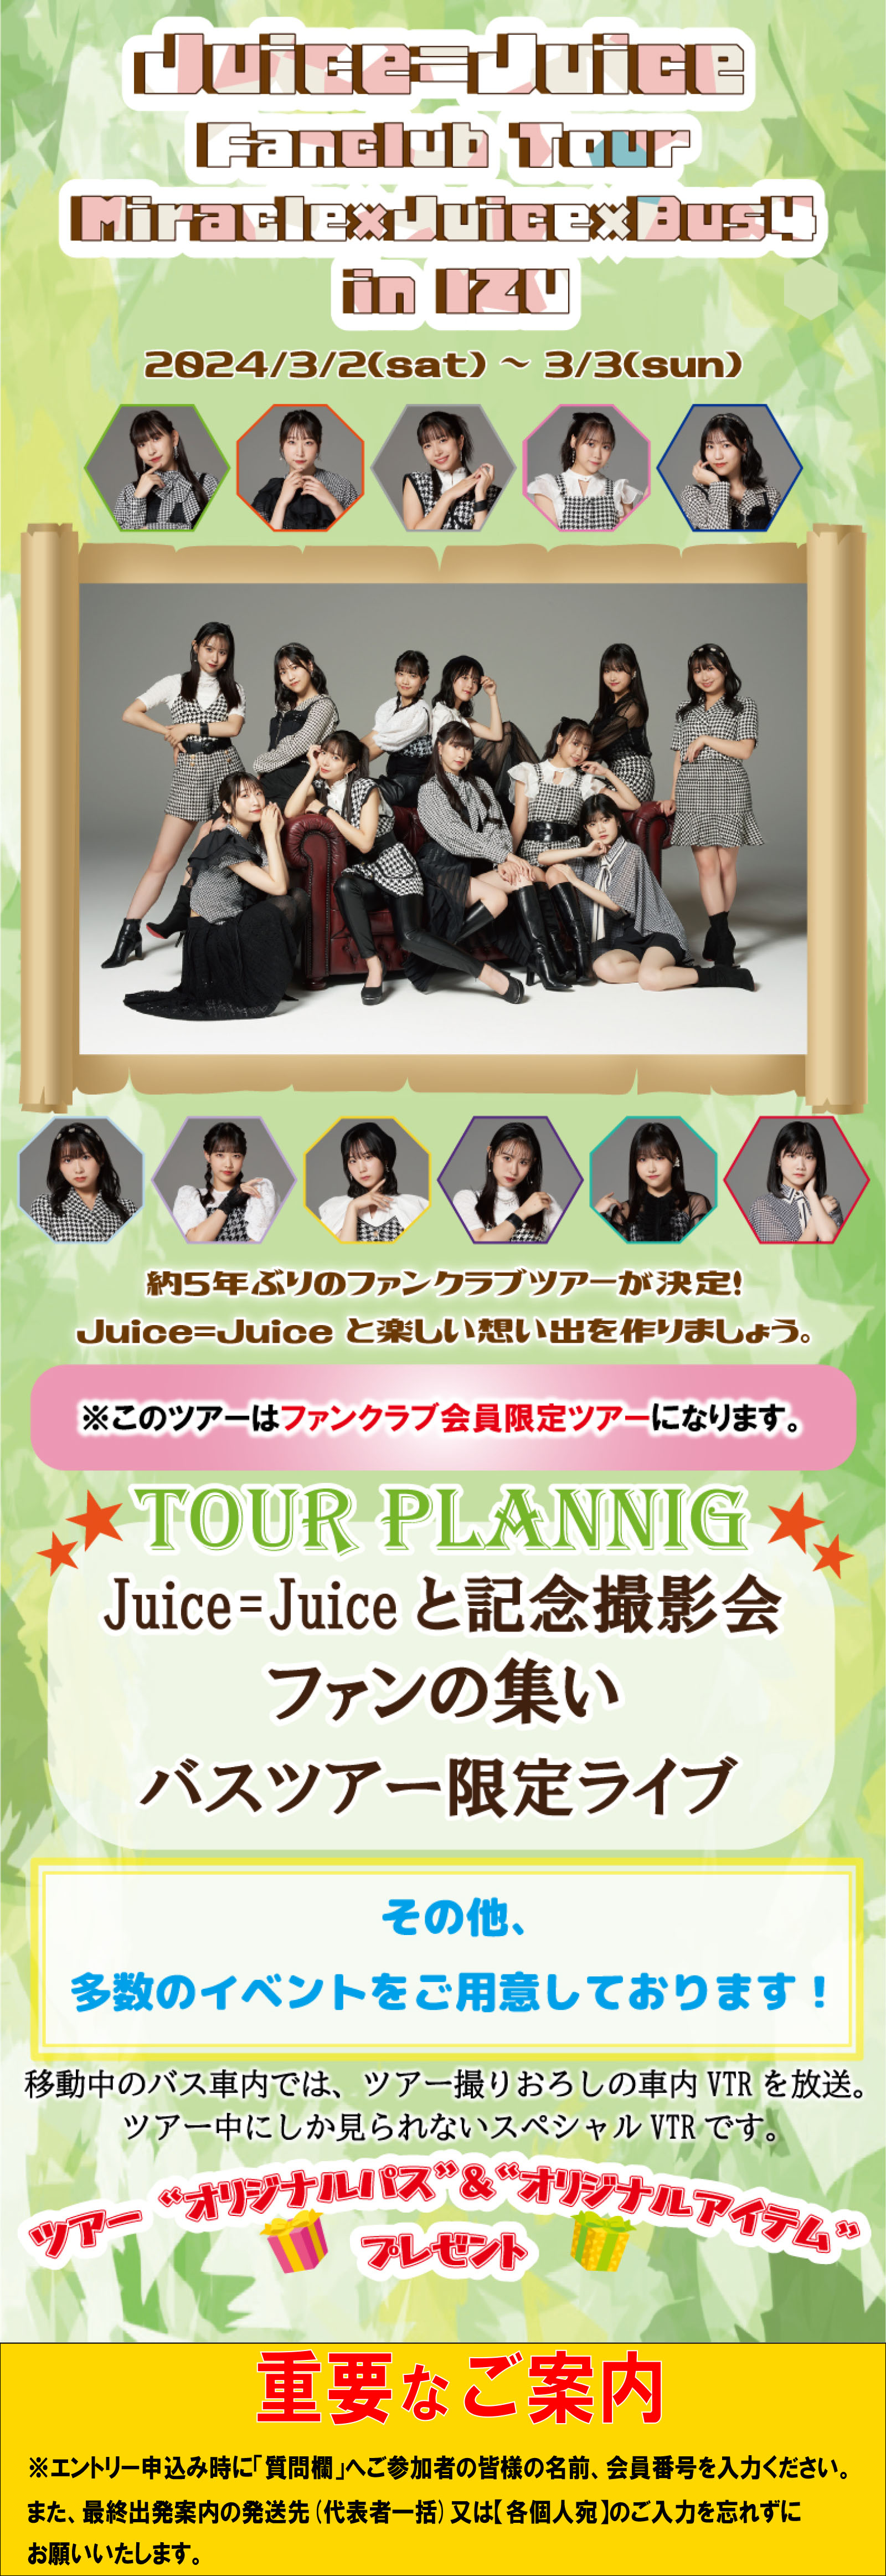 『Juice=Juice Fanclub Tour Miracle×Juice×Bus4 in IZU』
